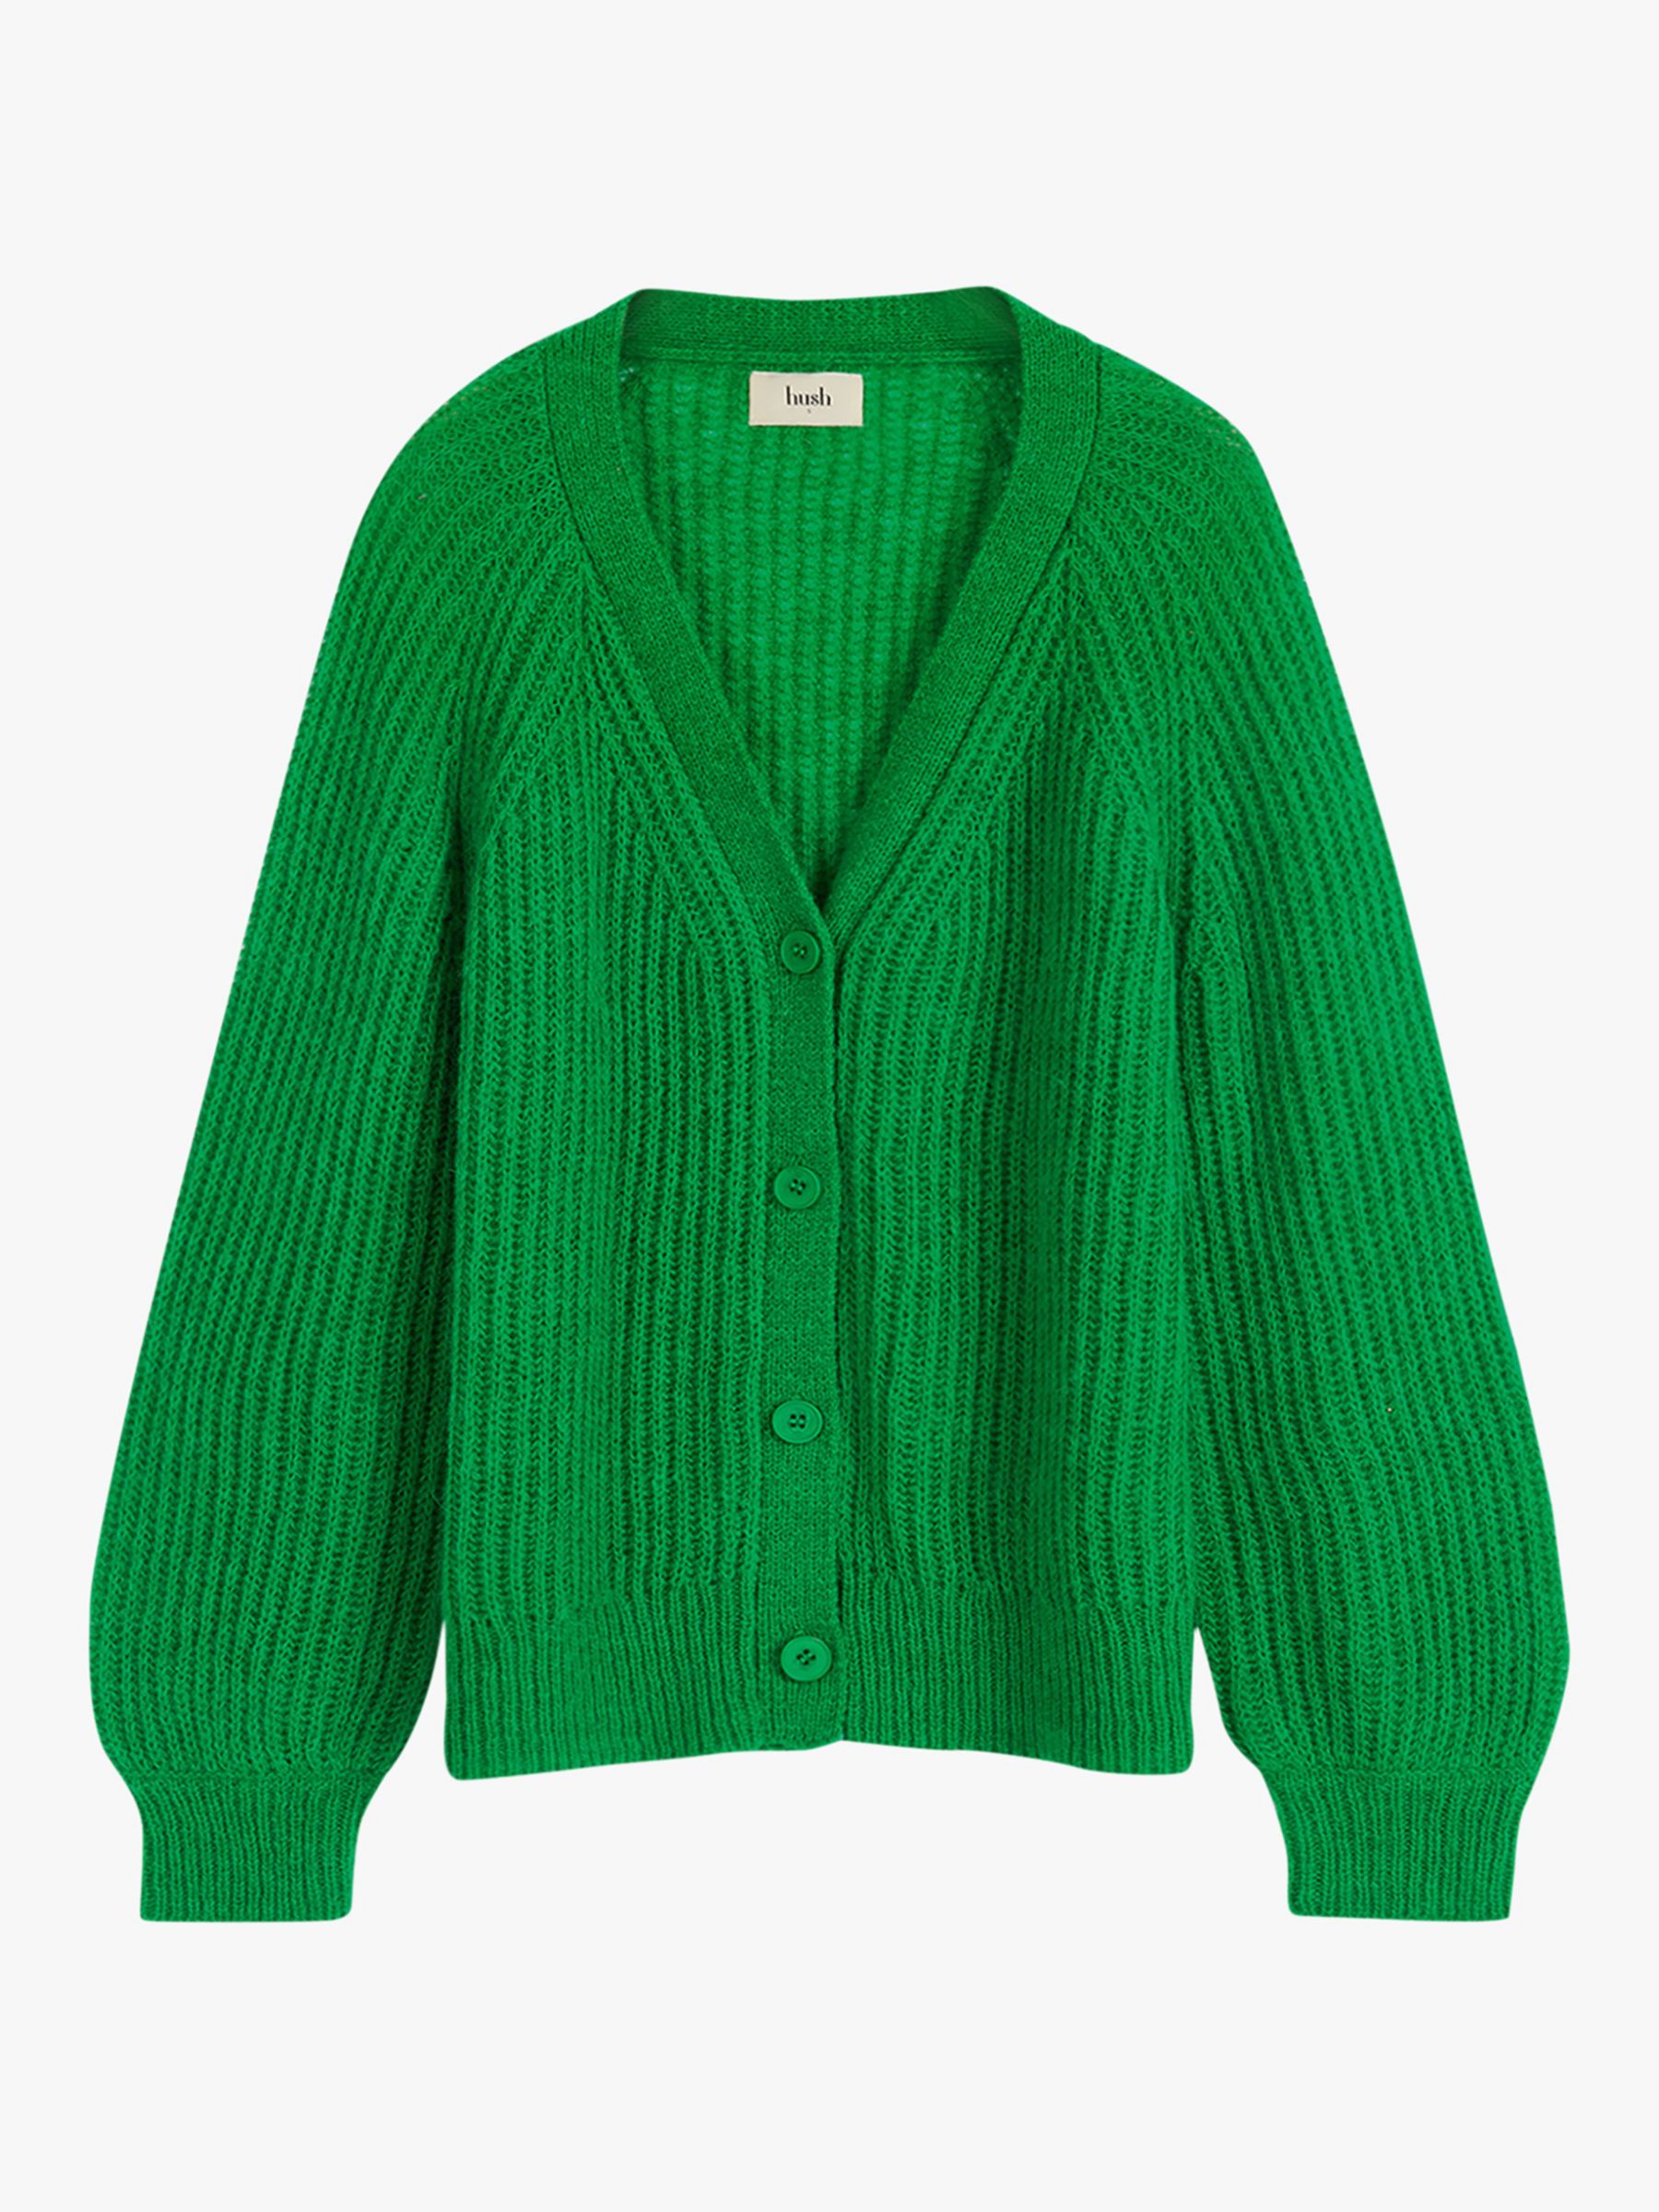 hush Maggie Knitted Wool Blend Cardigan, Green at John Lewis & Partners